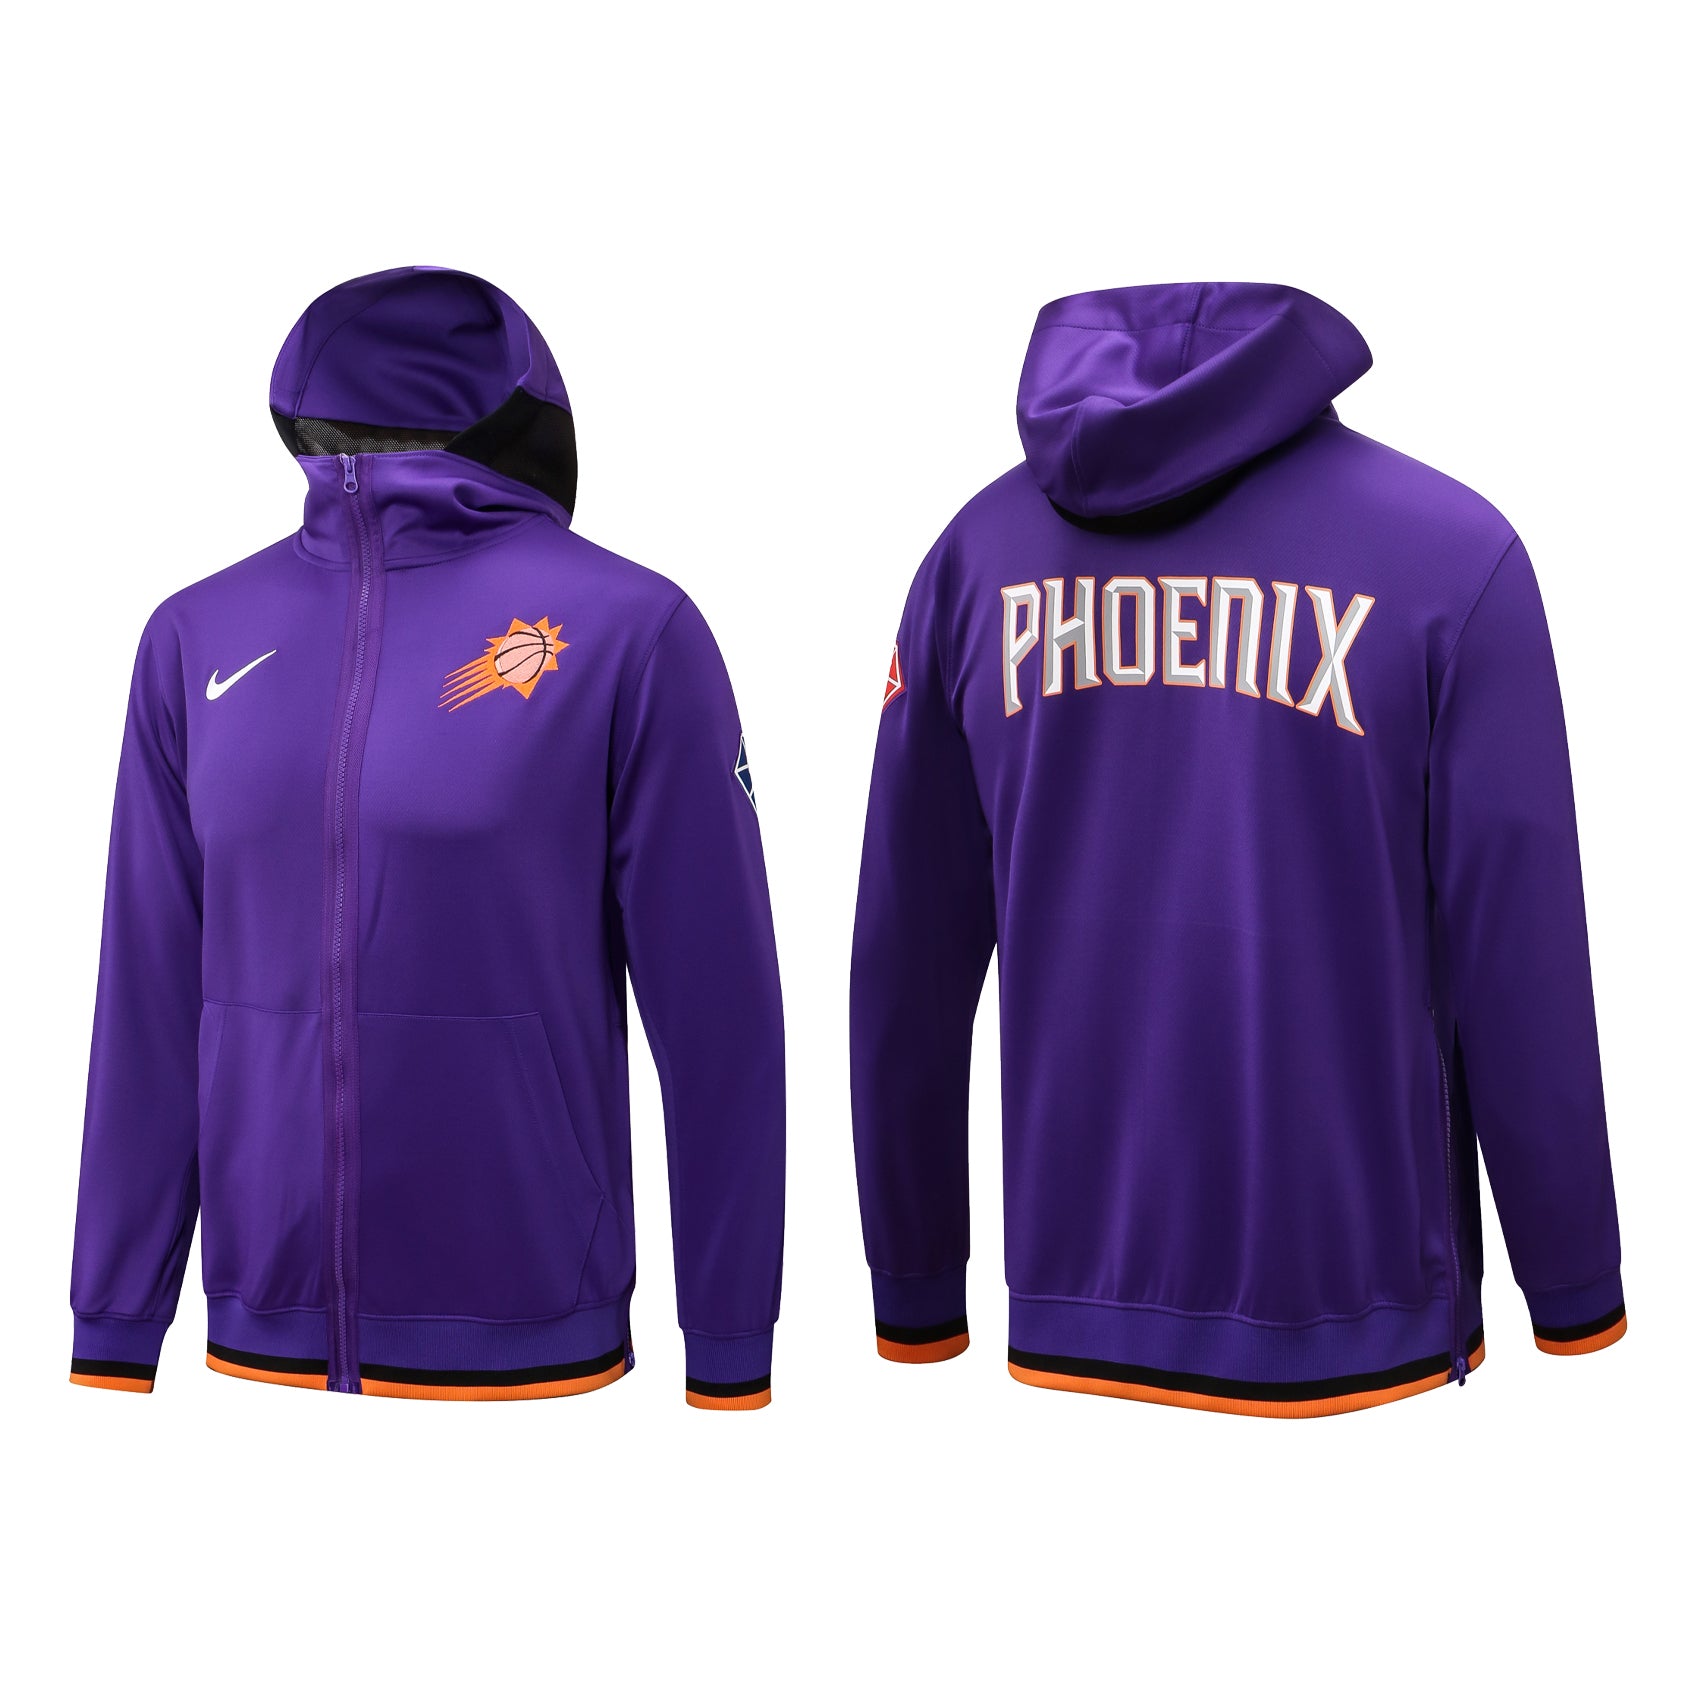 Phoenix purple jacket